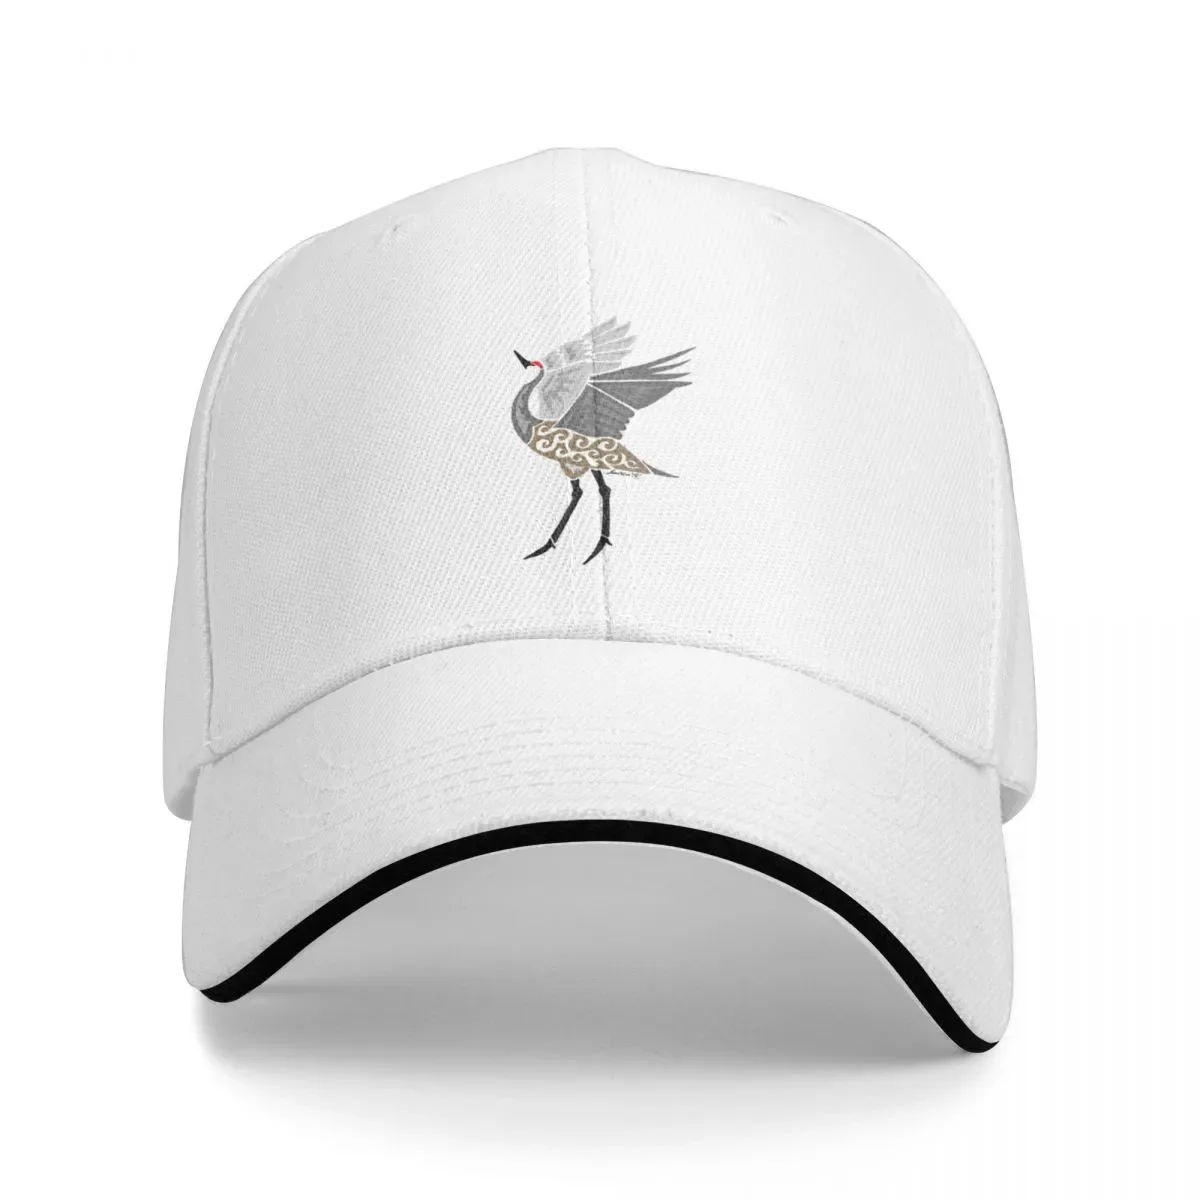 

New Dancing Sandhill Crane Tribal Design - Colored Cap Baseball Cap Ball cap Rugby hat for women Men's